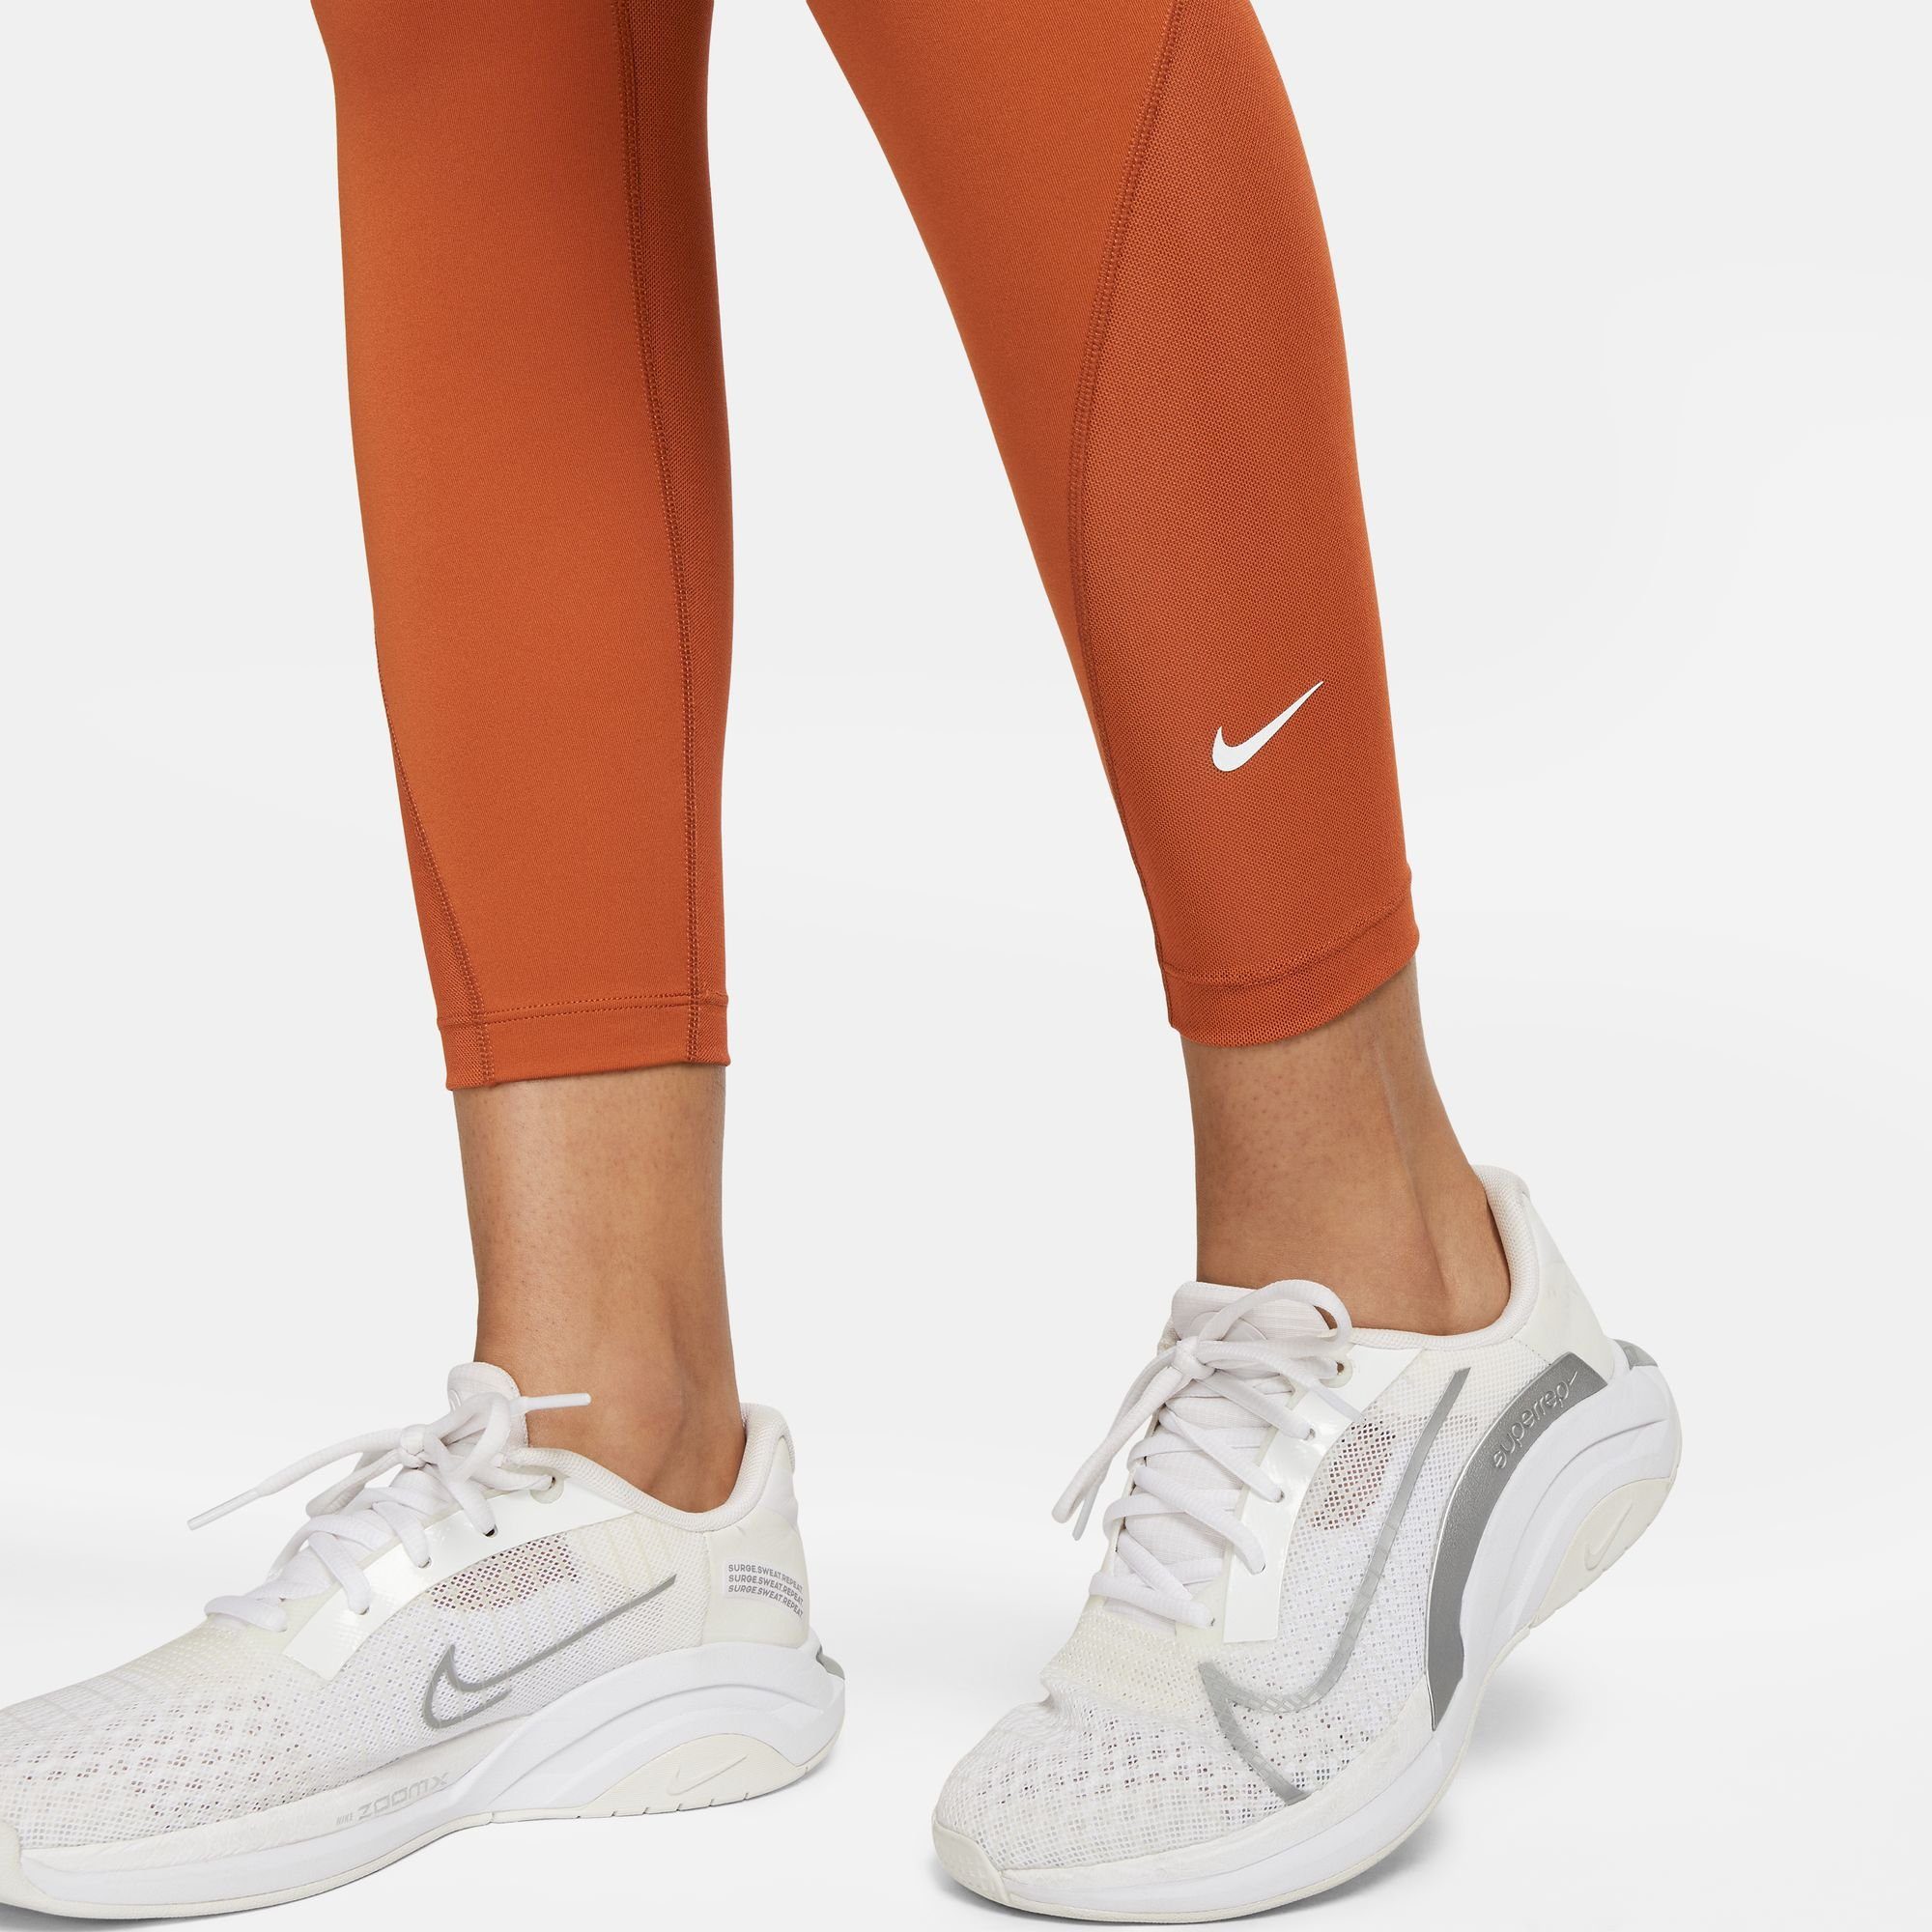 / HIGH-WAISTED Nike WOMEN'S ONE braun Trainingstights LEGGINGS